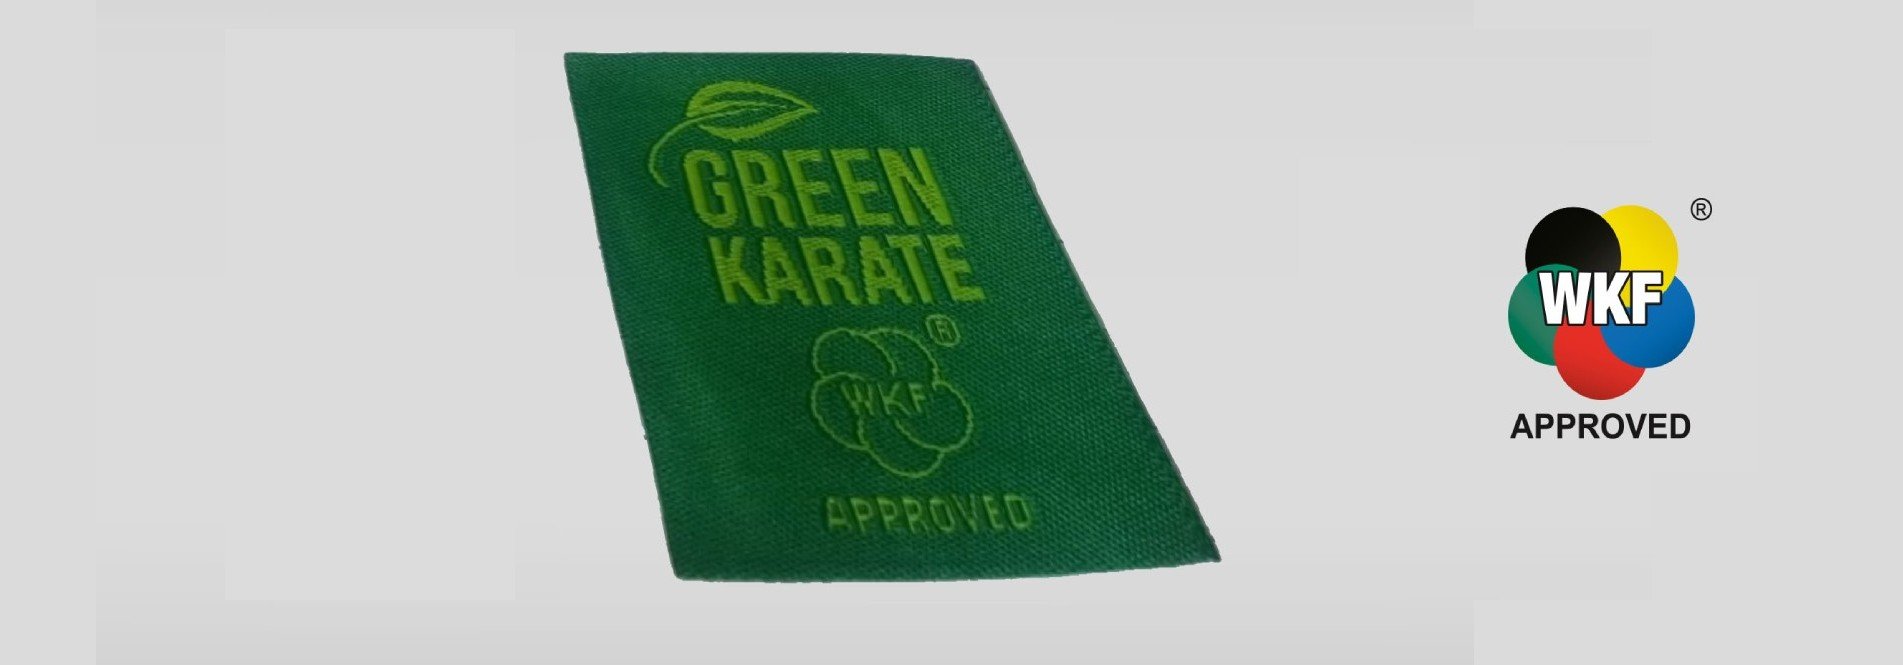 Green Karate